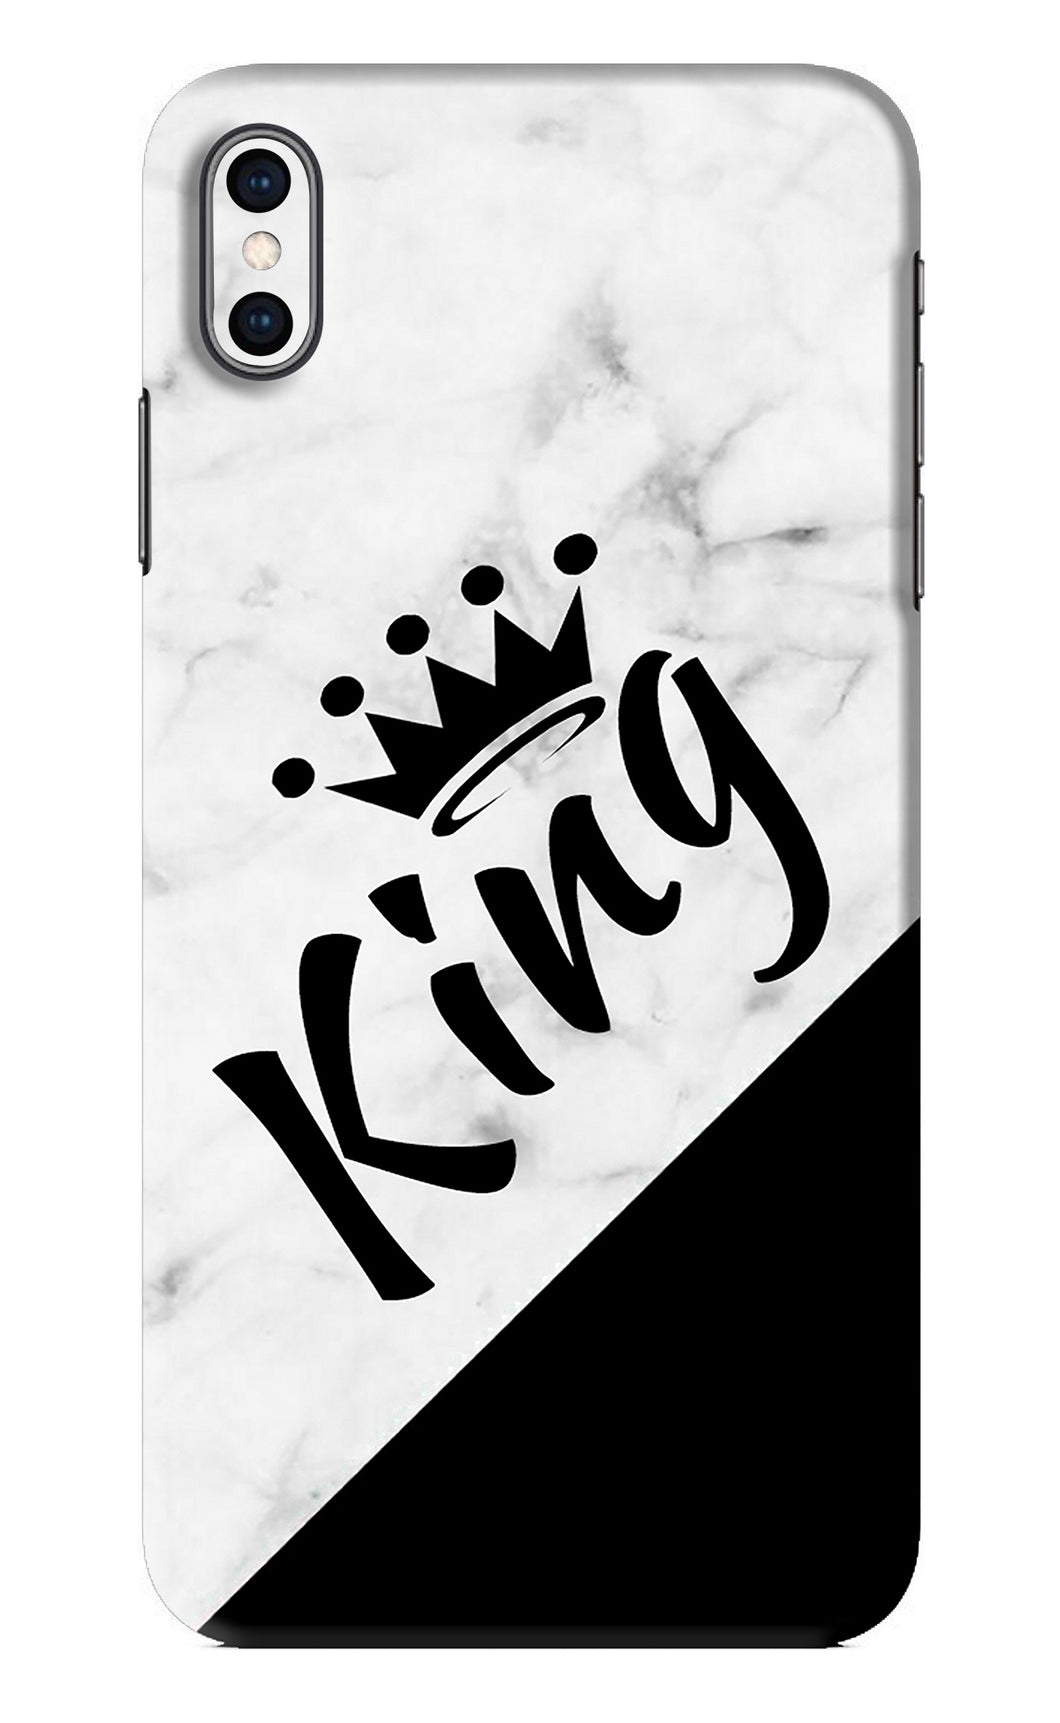 King iPhone XS Max Back Skin Wrap